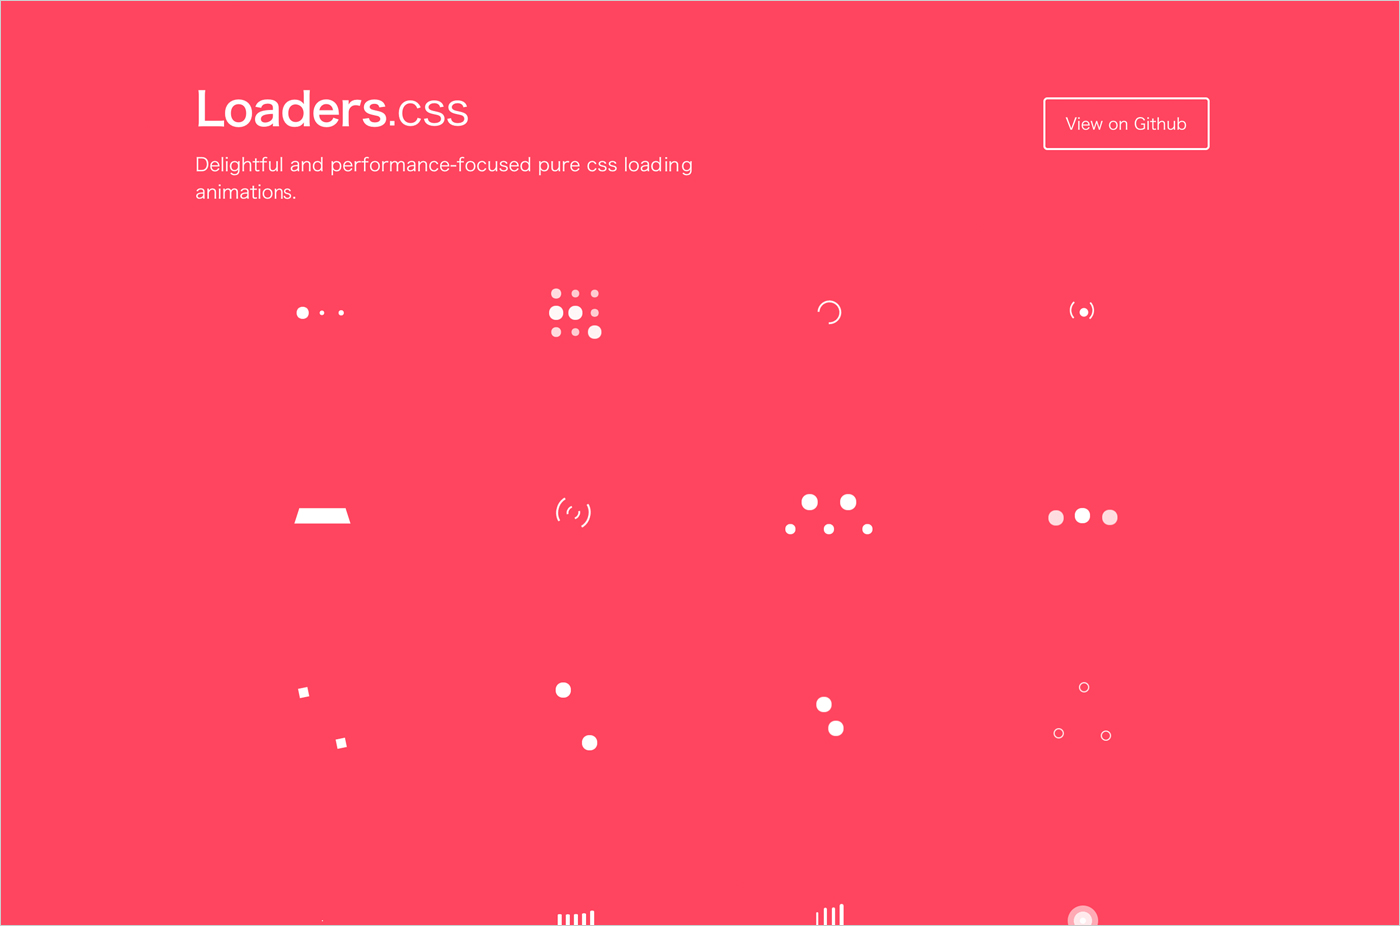 Loaders.cssウェブサイトの画面キャプチャ画像